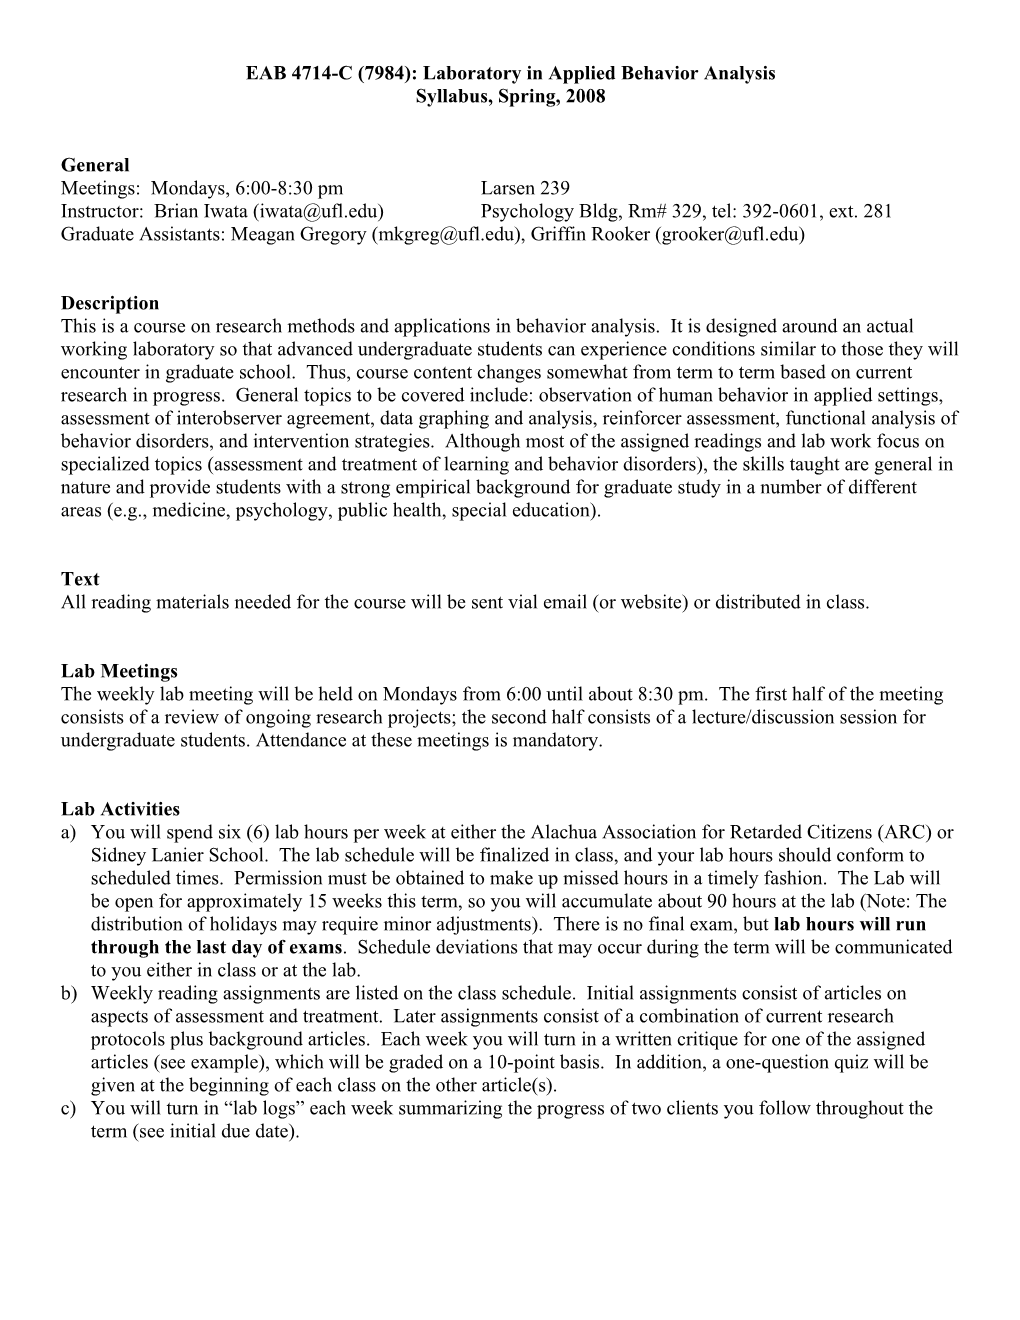 EAB 4714-C: Laboratory in Applied Behavior Analysis